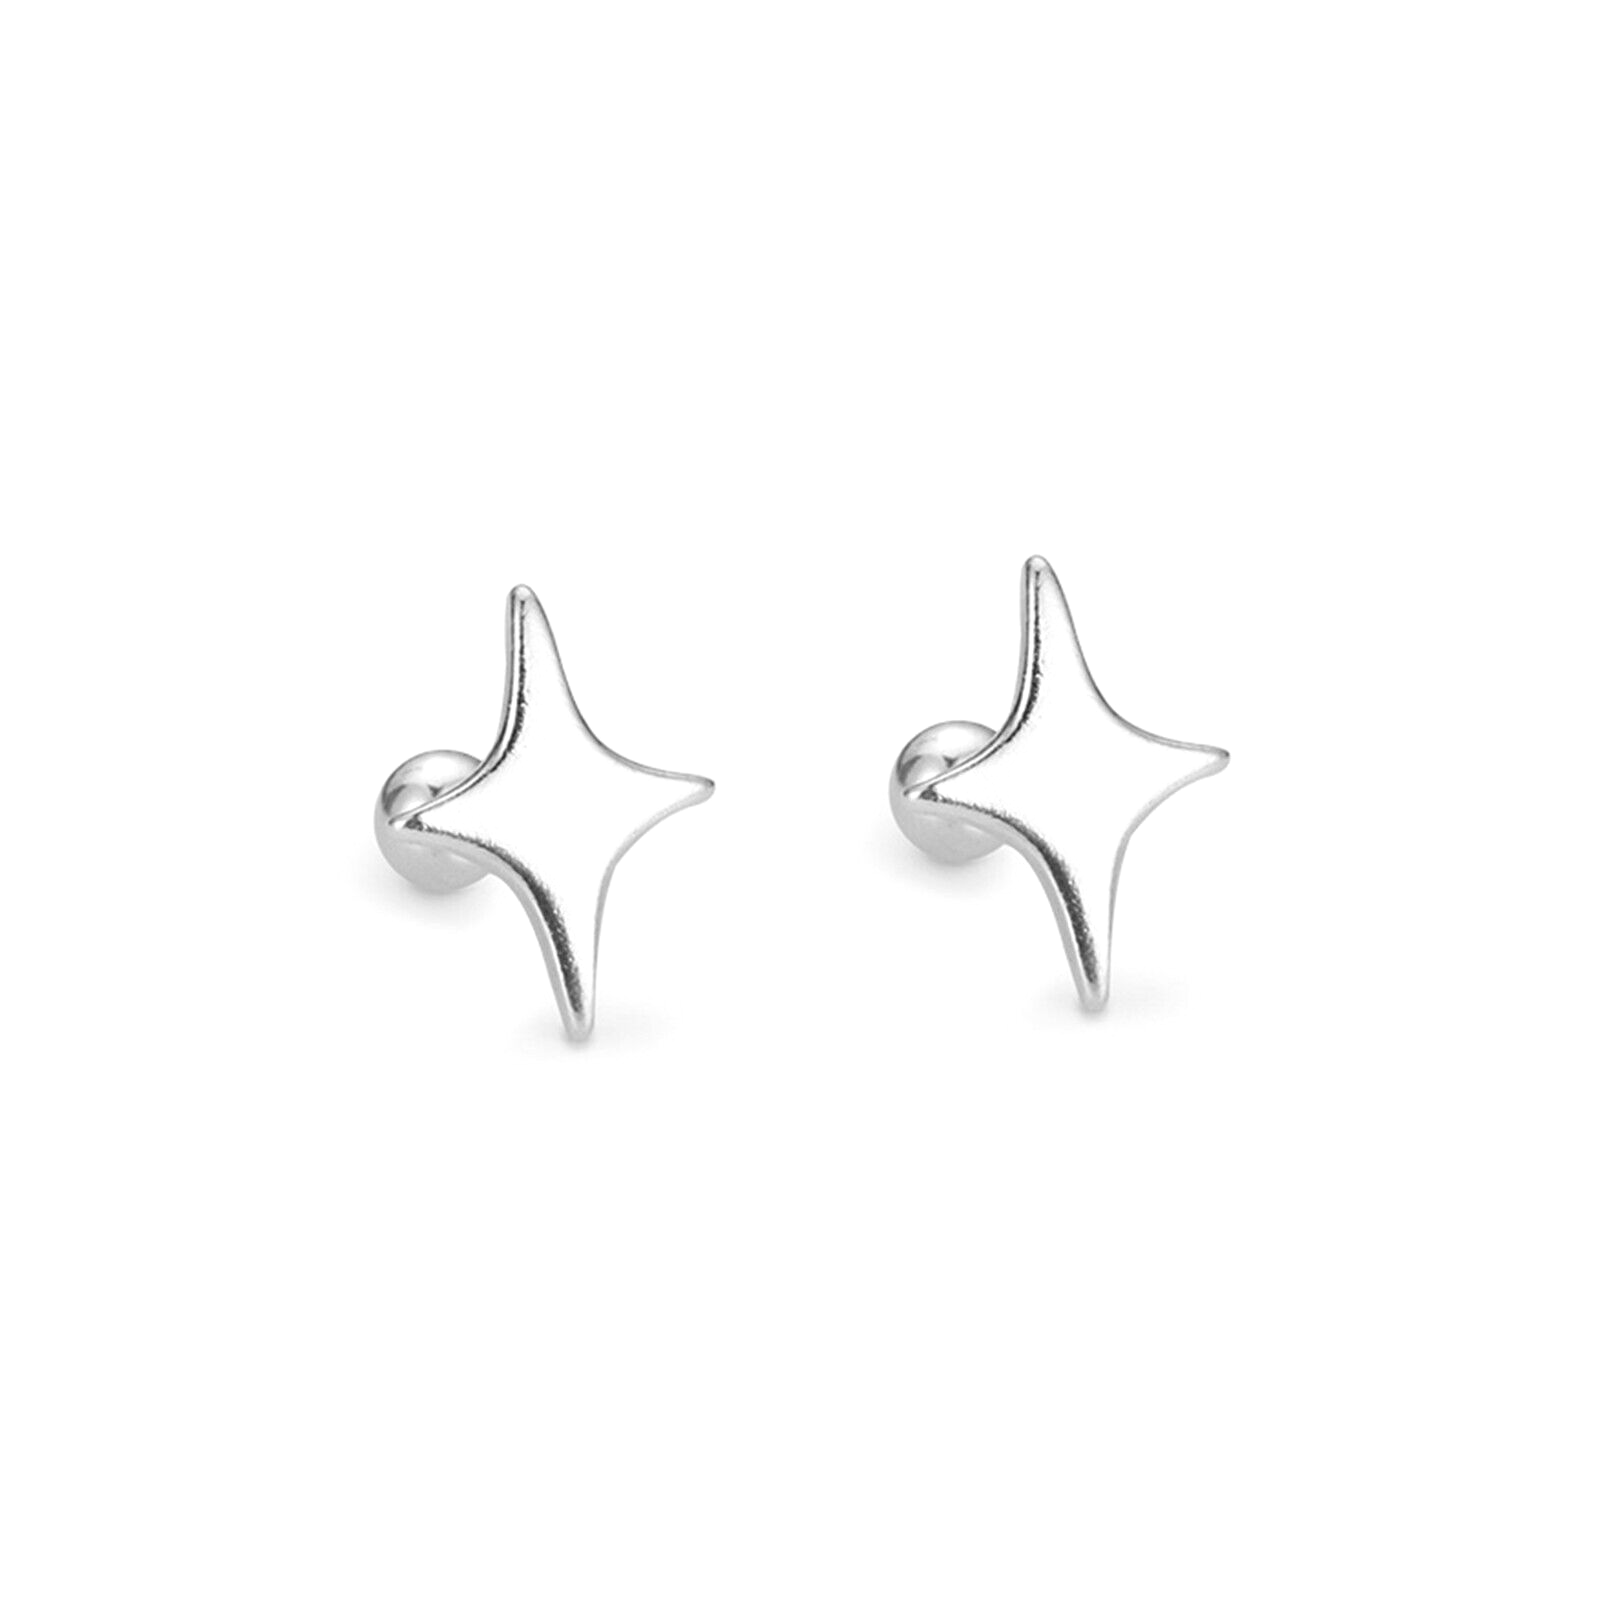 Quatrefoil Earring Backs in Sterling Silver, 9mm